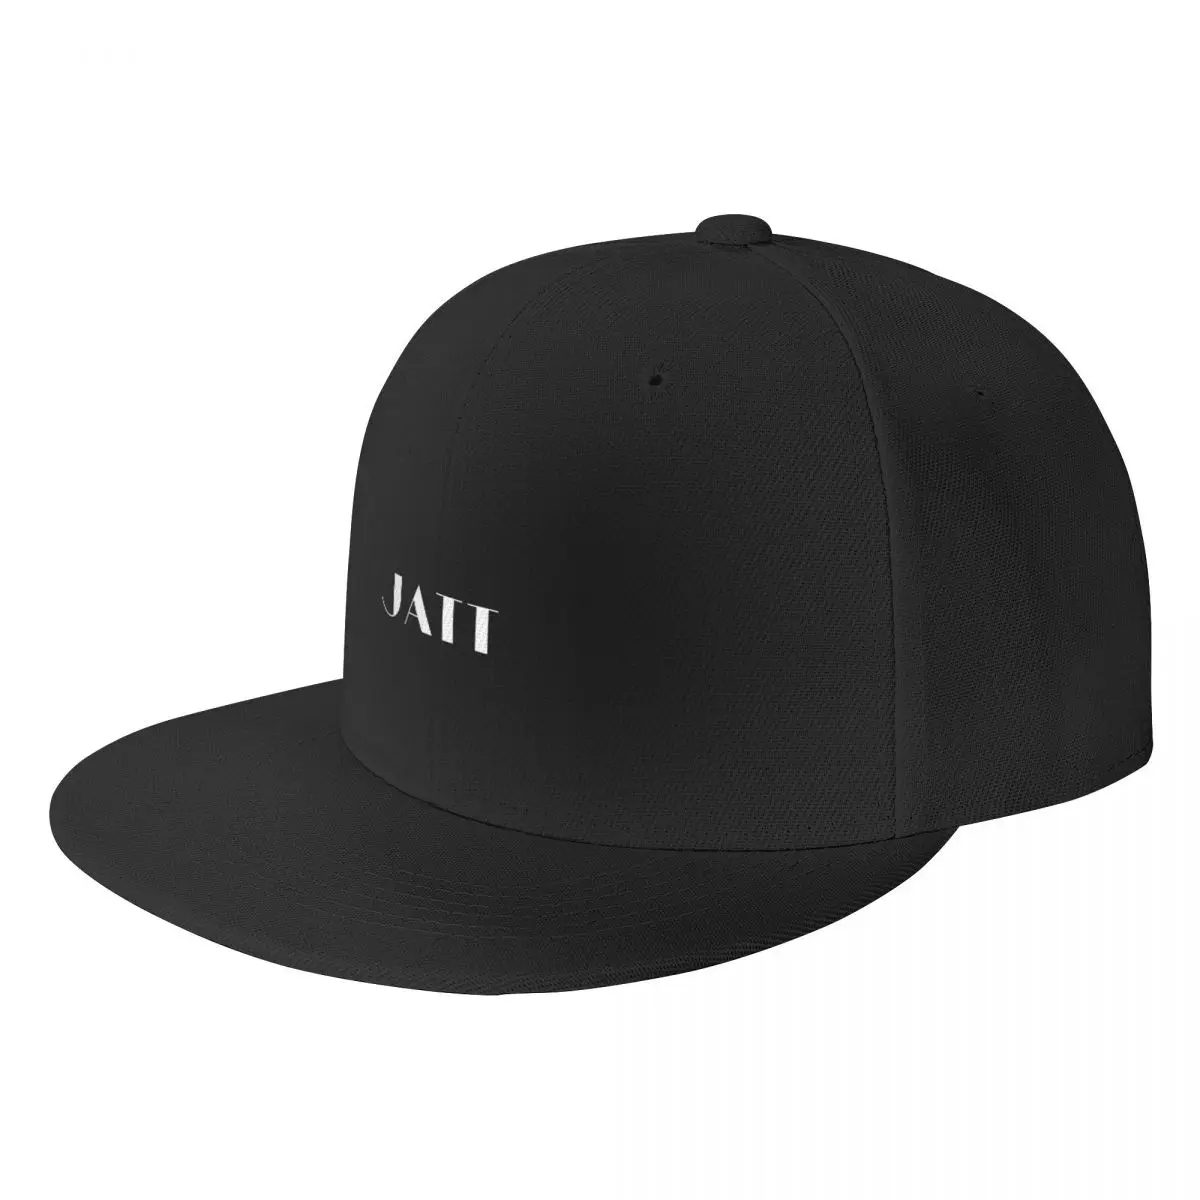 

Бейсболка JATT, пляжная шляпа, кепка грузовика, мужские кепки, женские кепки